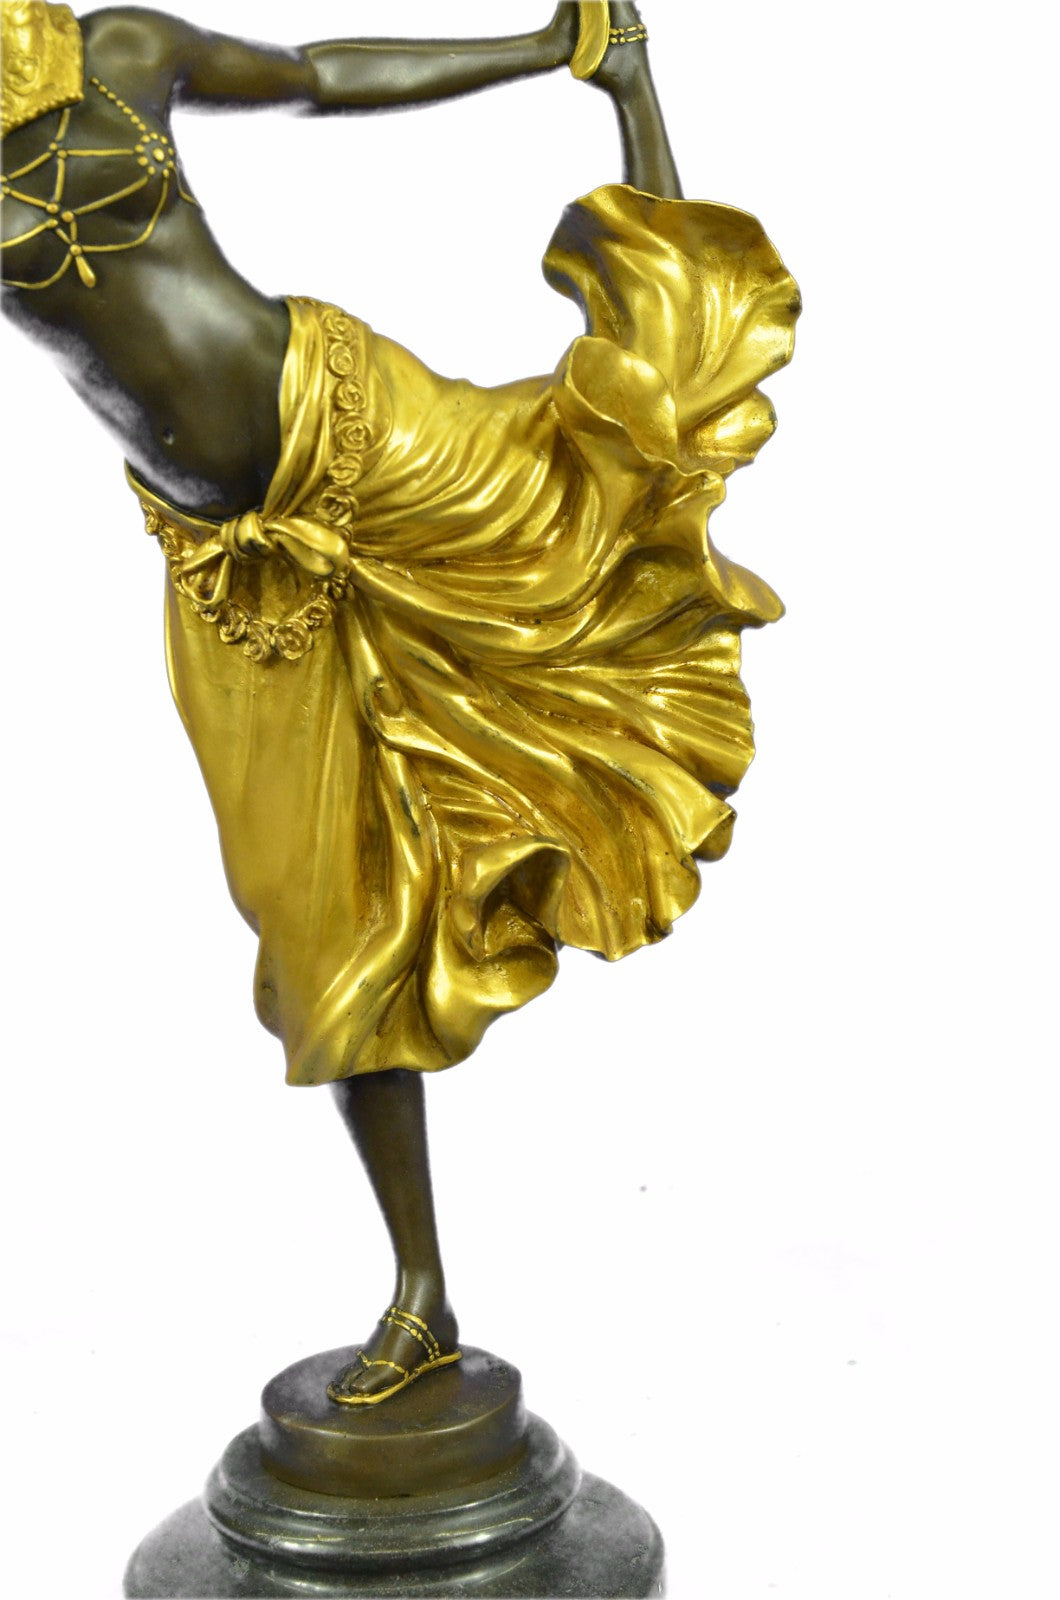 Art Deco/Nouveau Gypsy Dancer Museum Quality Classic Artwork by Colinet Statue